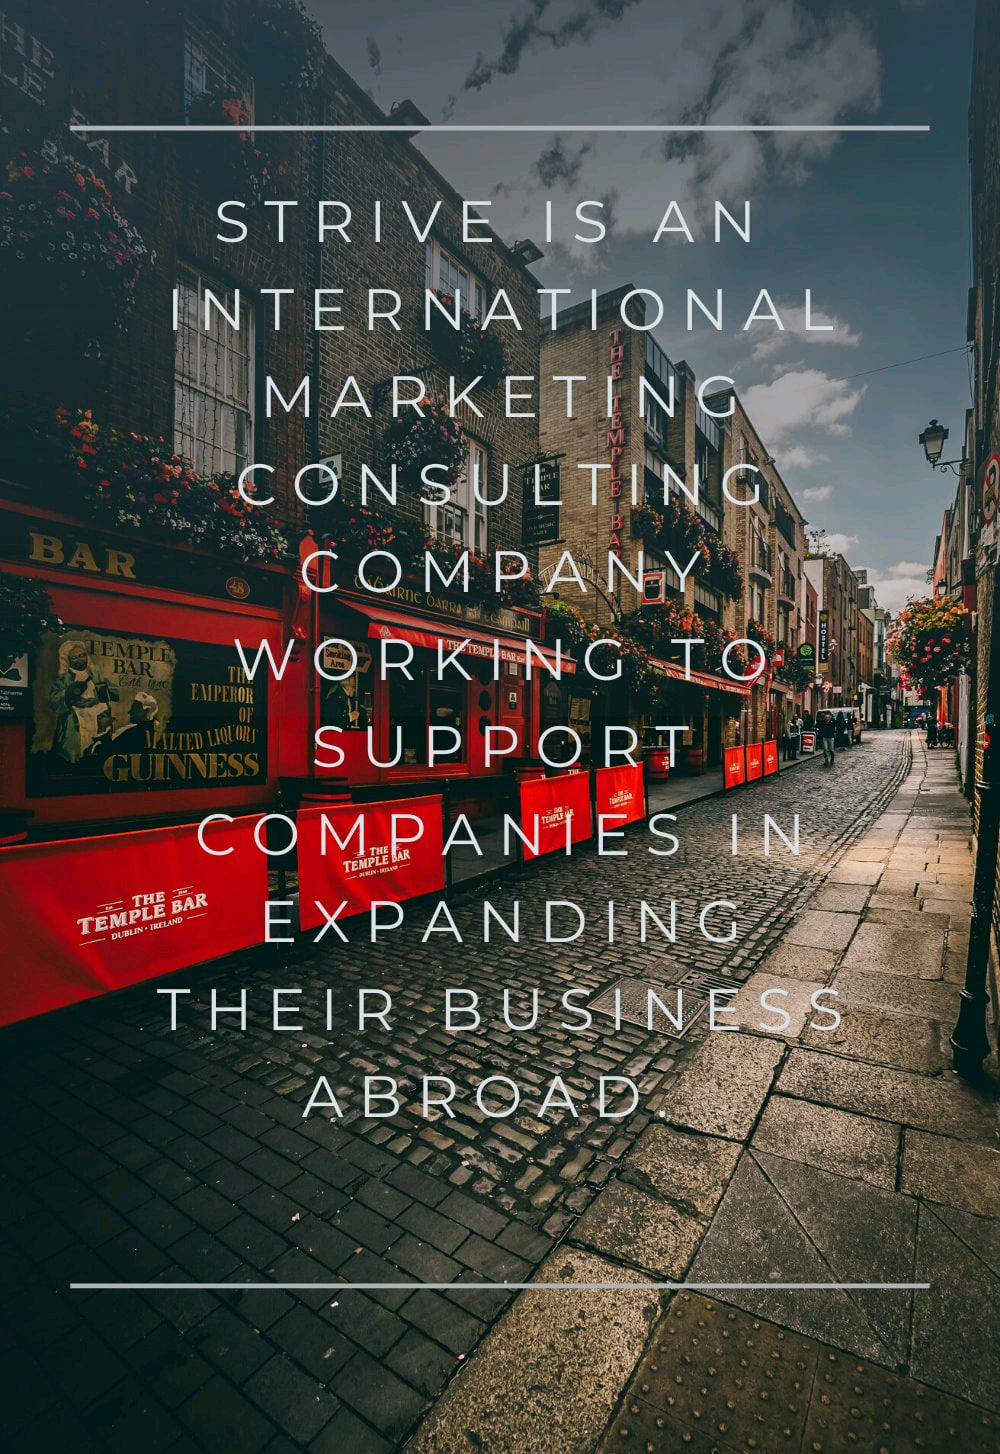 International Marketing 